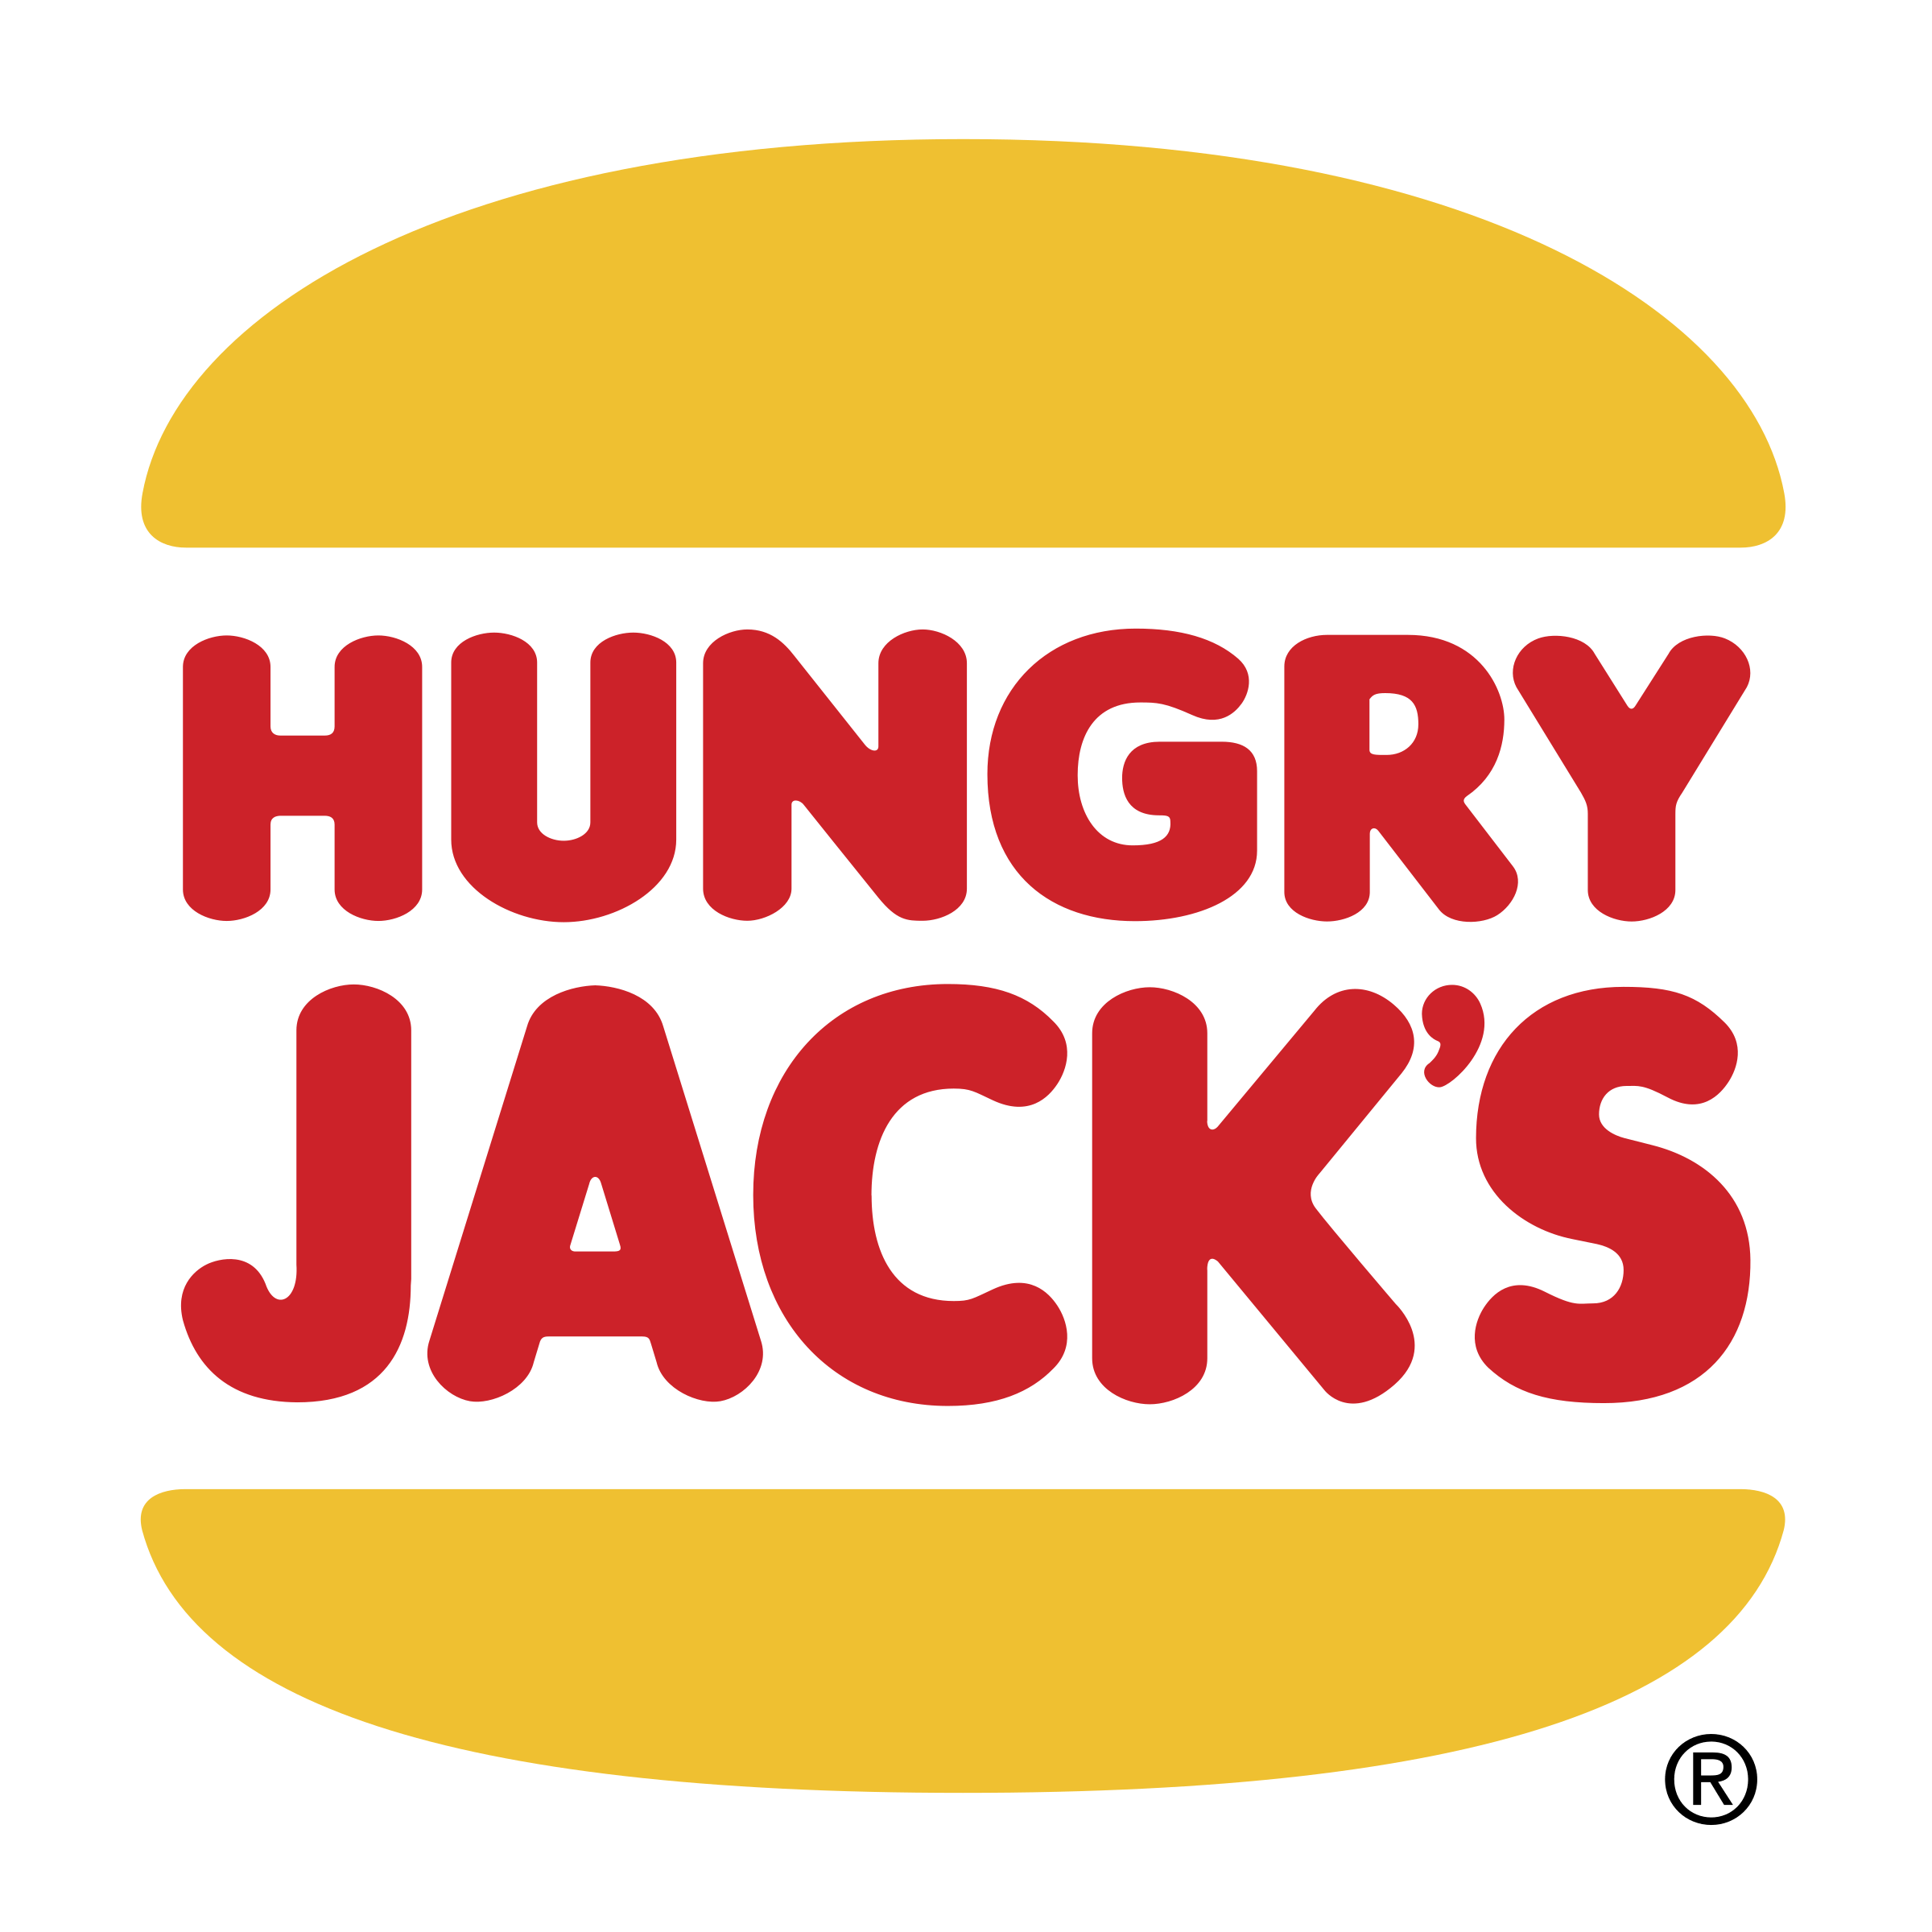 Jack's Logo - Hungry Jack's Logo PNG Transparent & SVG Vector - Freebie Supply